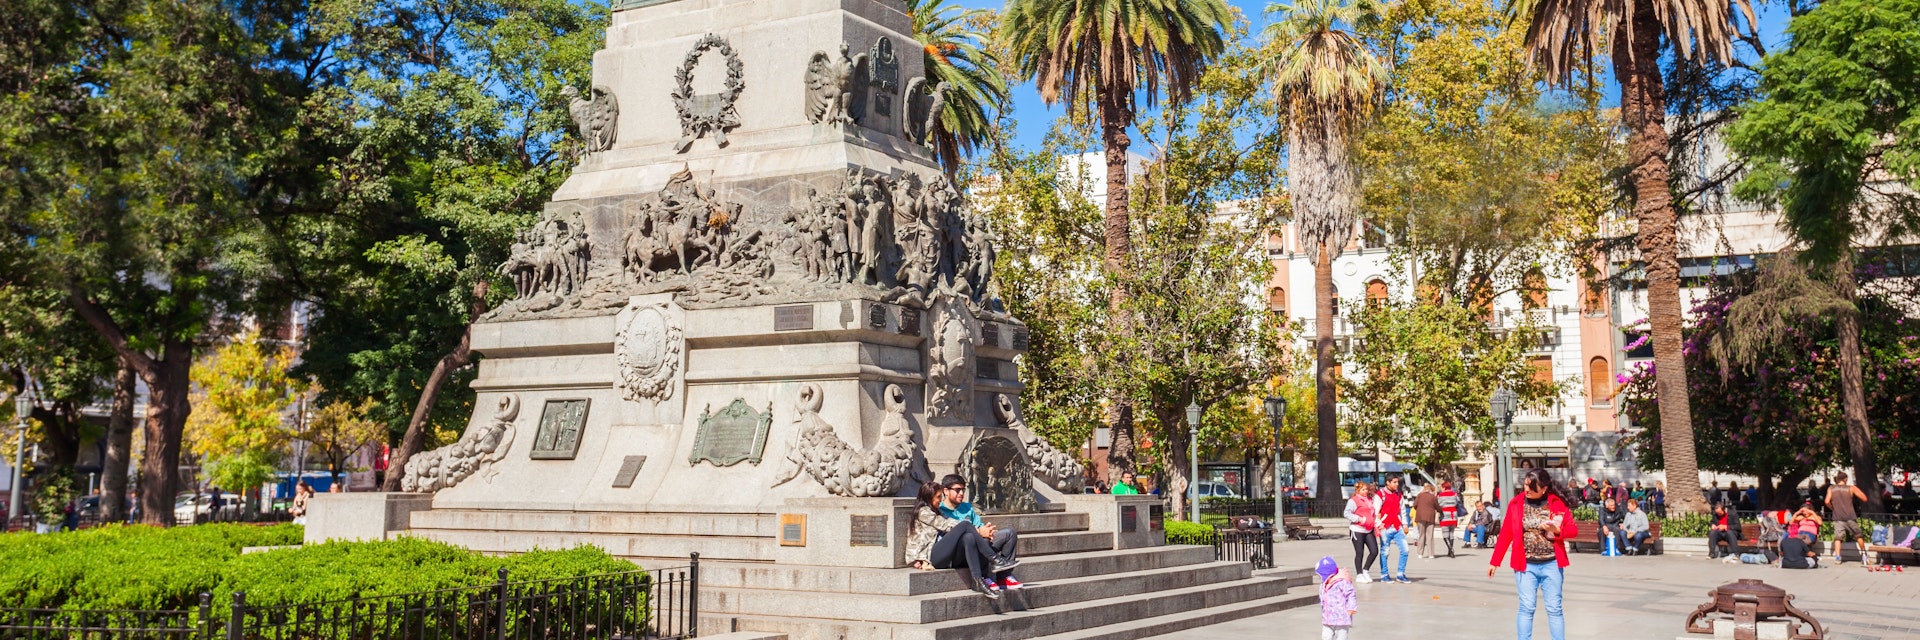 APRIL 30, 2016: General Jose de San Martin monument on Plaza San Martin square in Cordoba, Argentina. Jose de San Martin is a hero of the Argentine War of Independence.